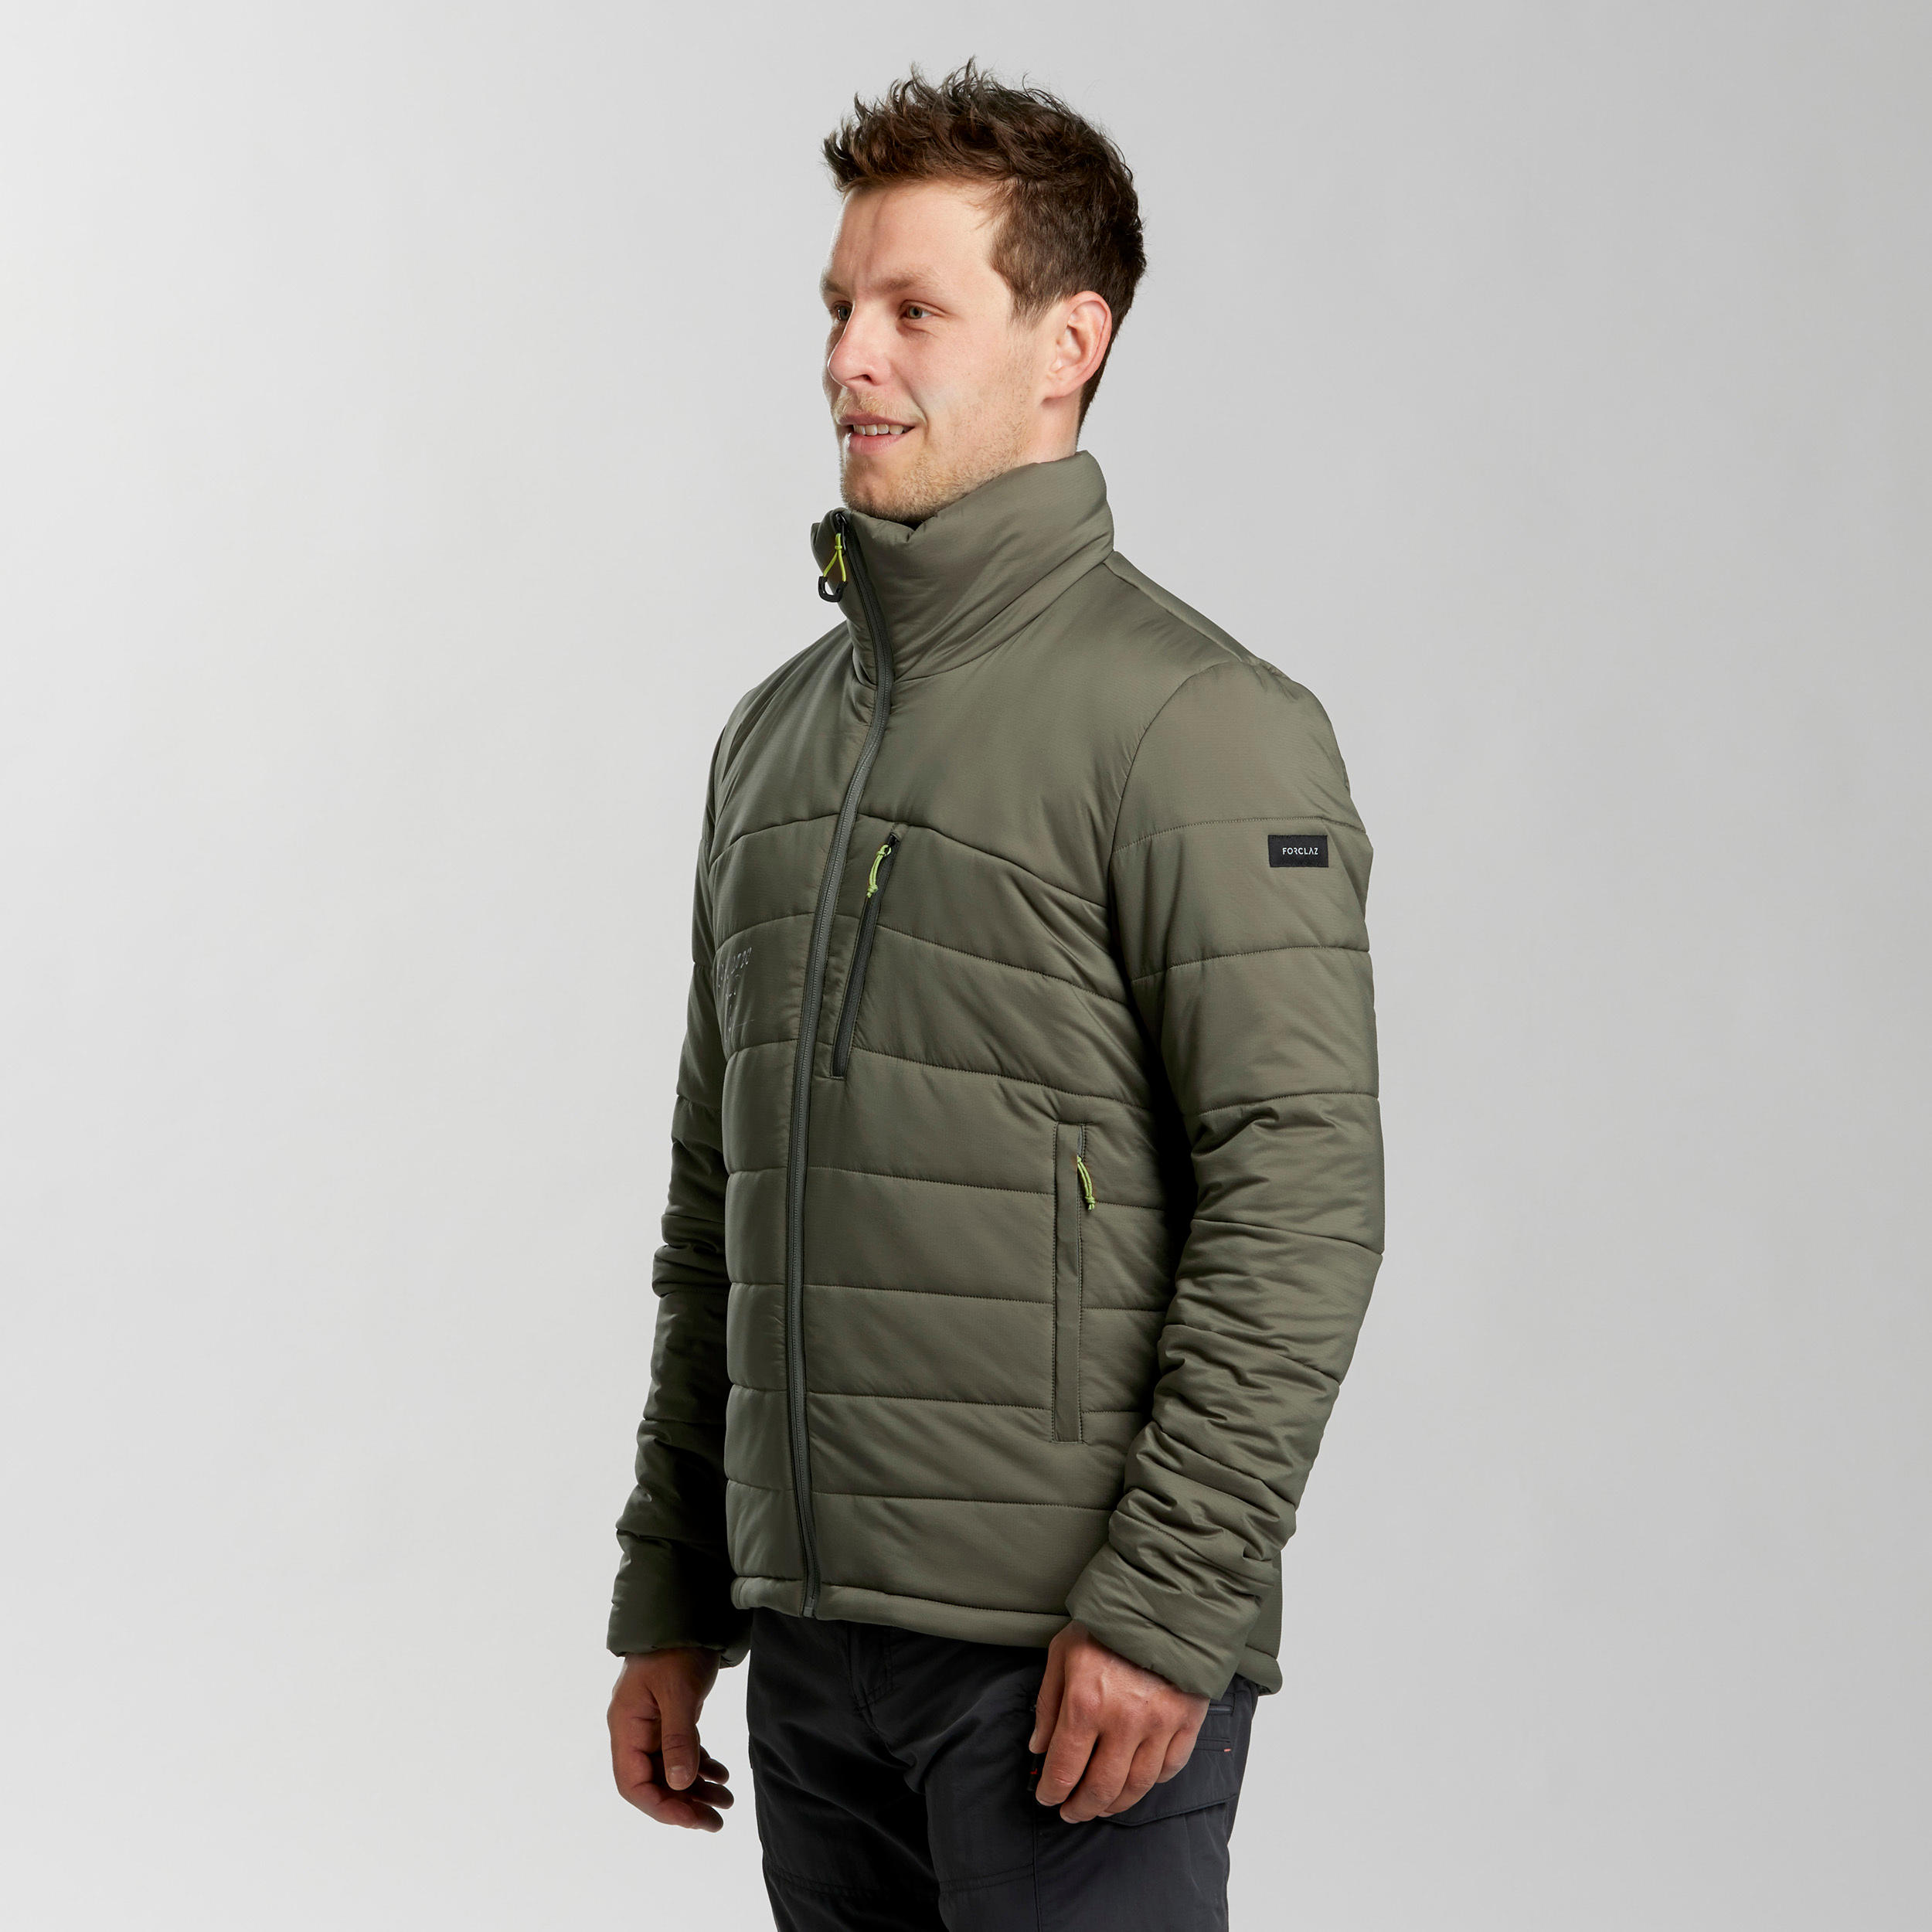 FORCLAZ Men's Synthetic Mountain Trekking Padded Jacket - TREK 500 -10°C Khaki